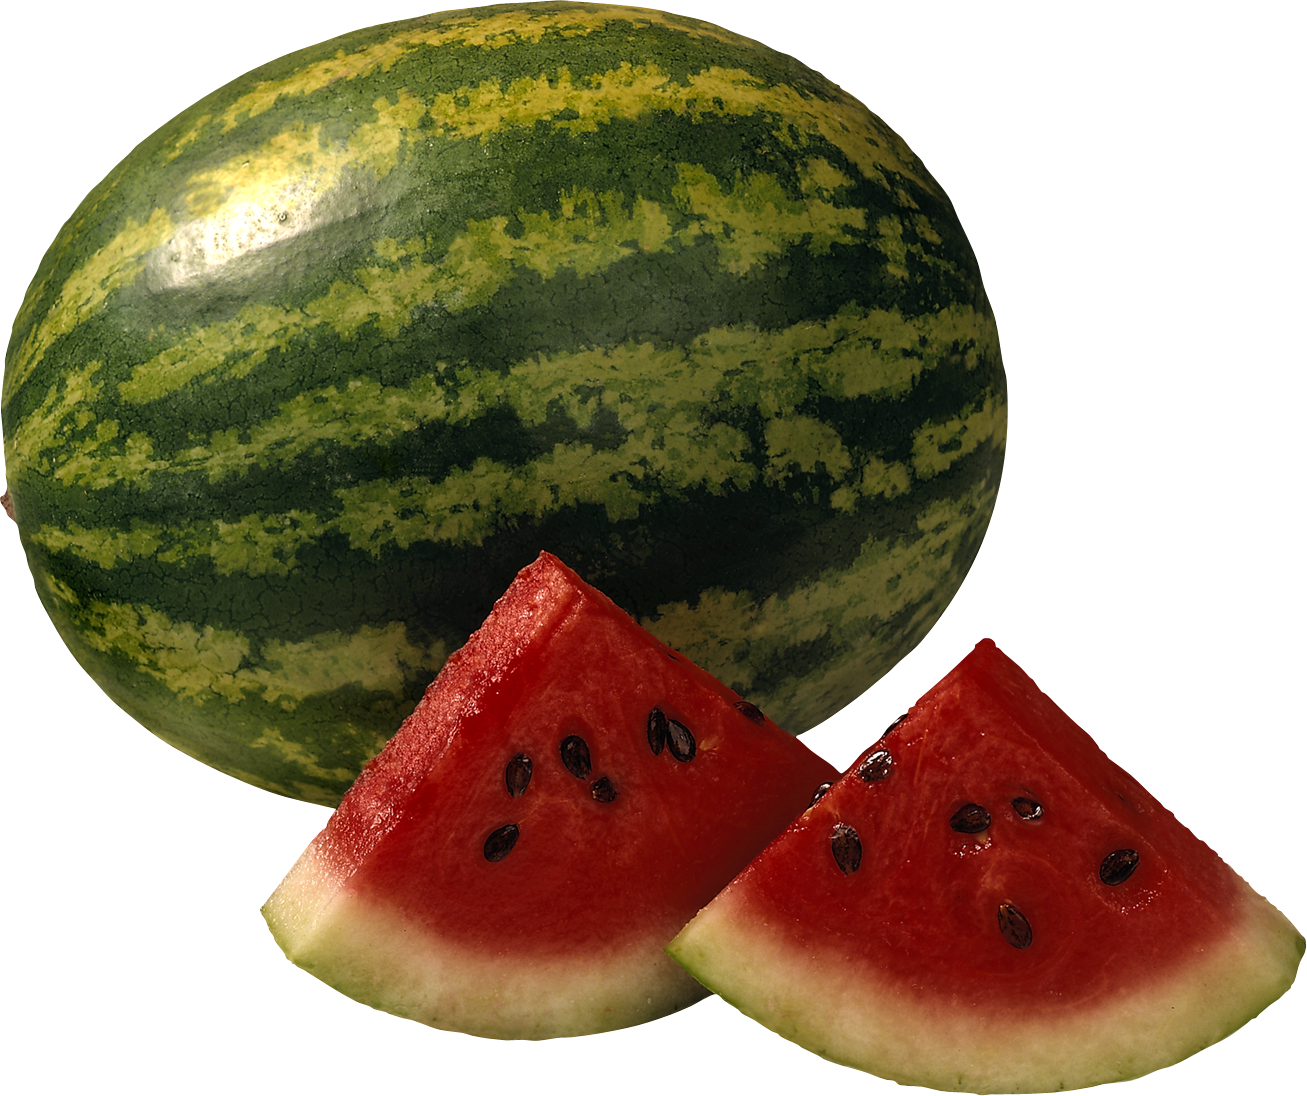 Musk-melon [मस्क म